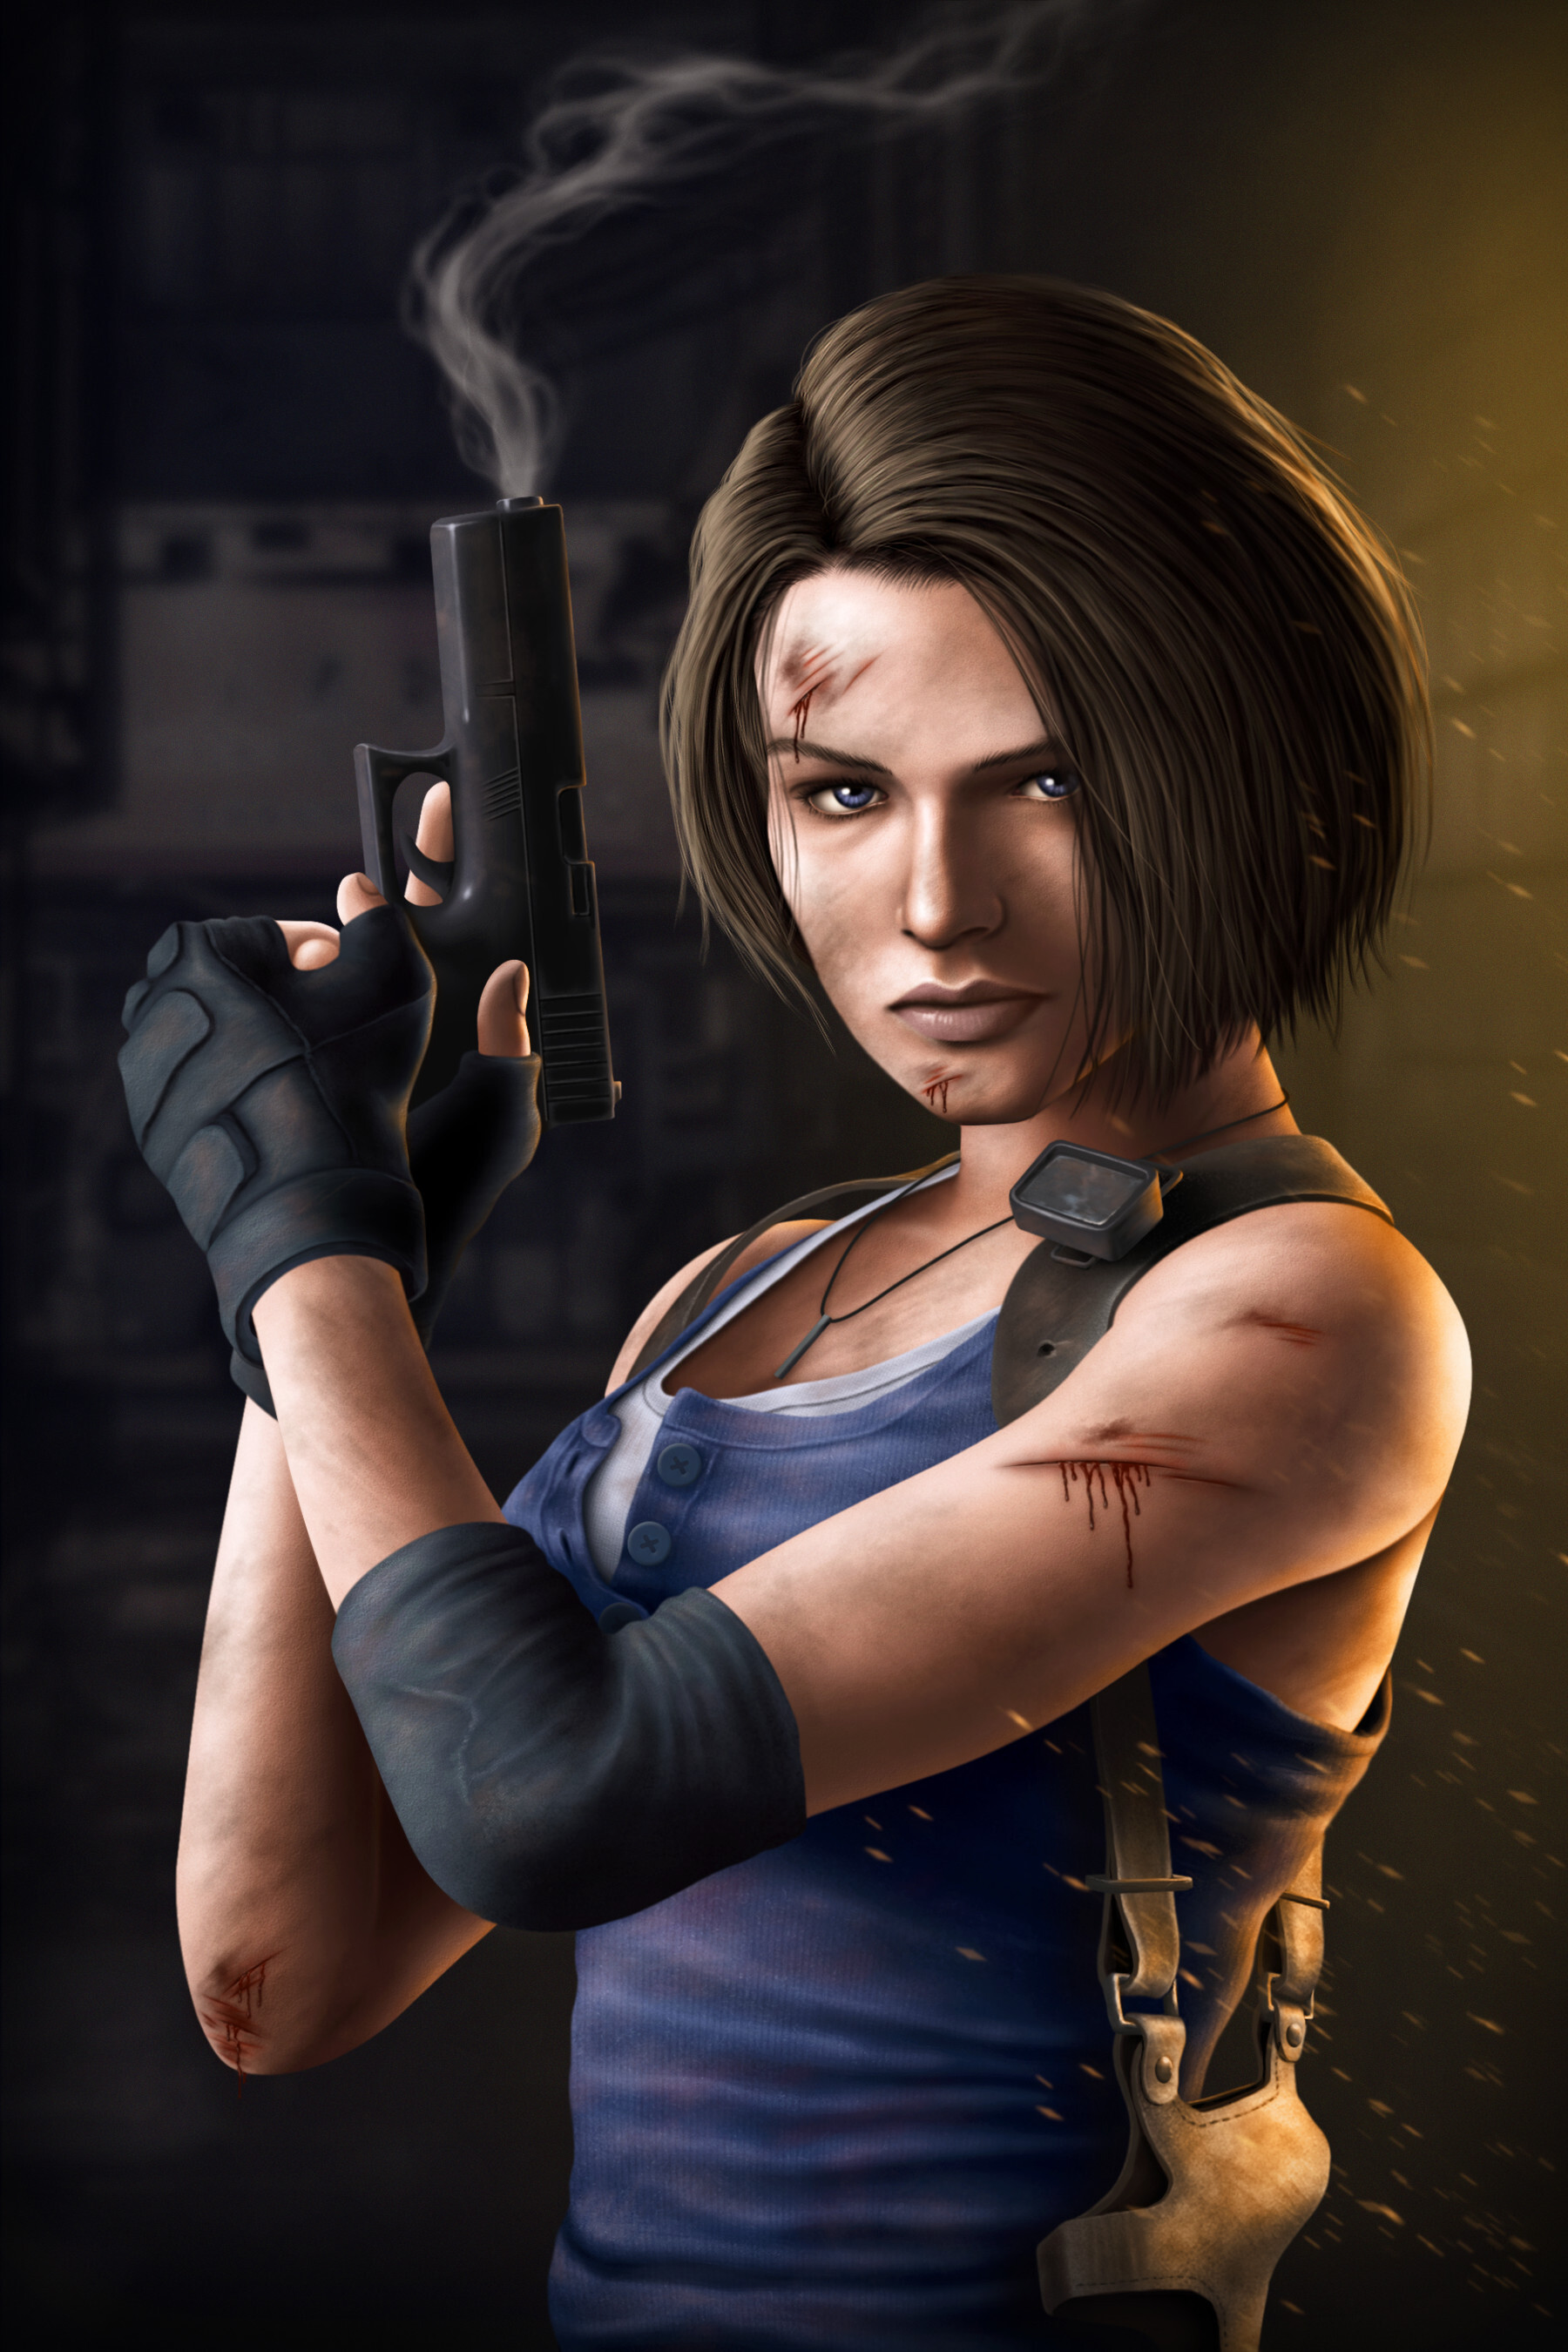 Jill Valentine Resident Evil 3 ART PRINT 